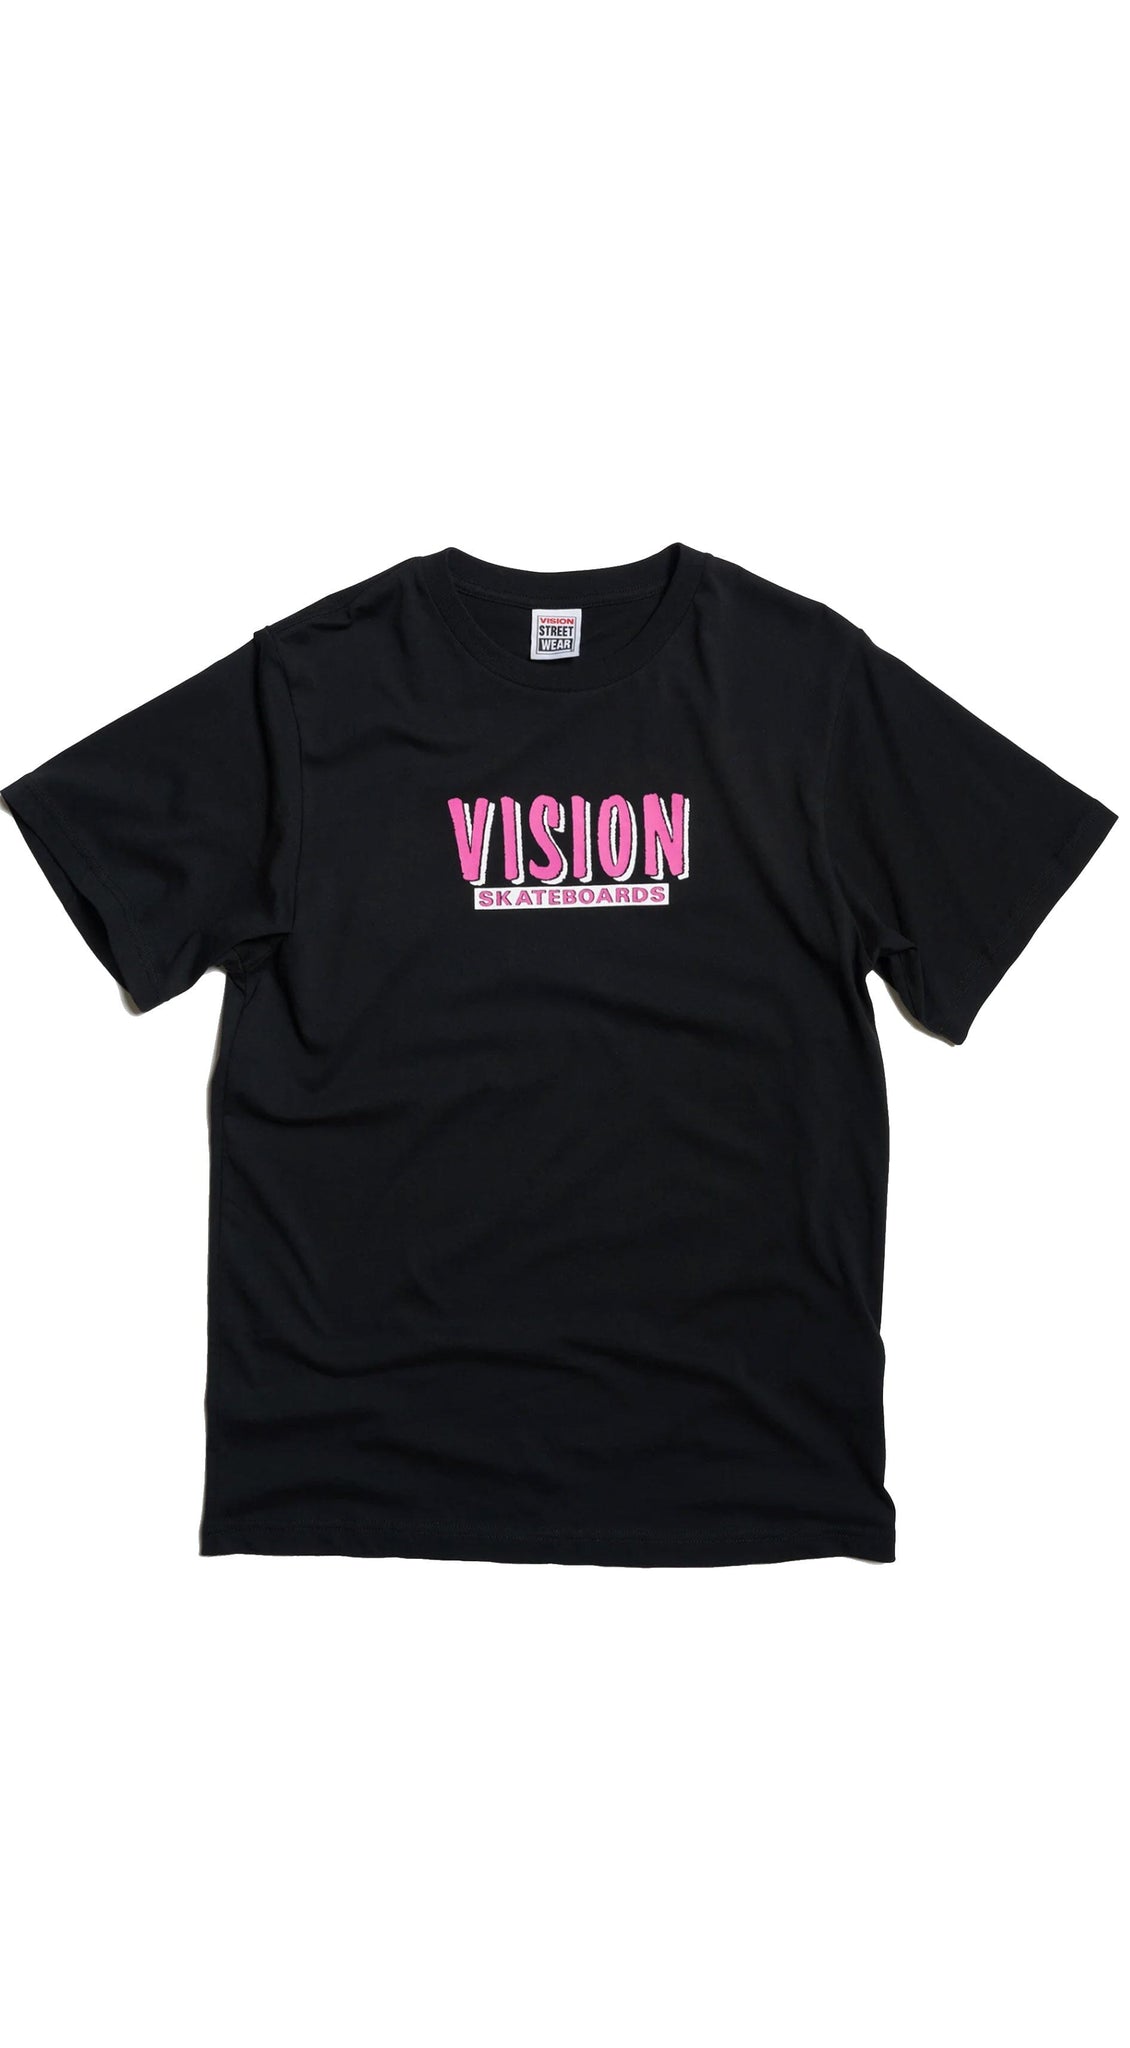 Vision Street Wear Skateboards S/S Black T-shirt - Camiseta Ropa Vision Skateboards 